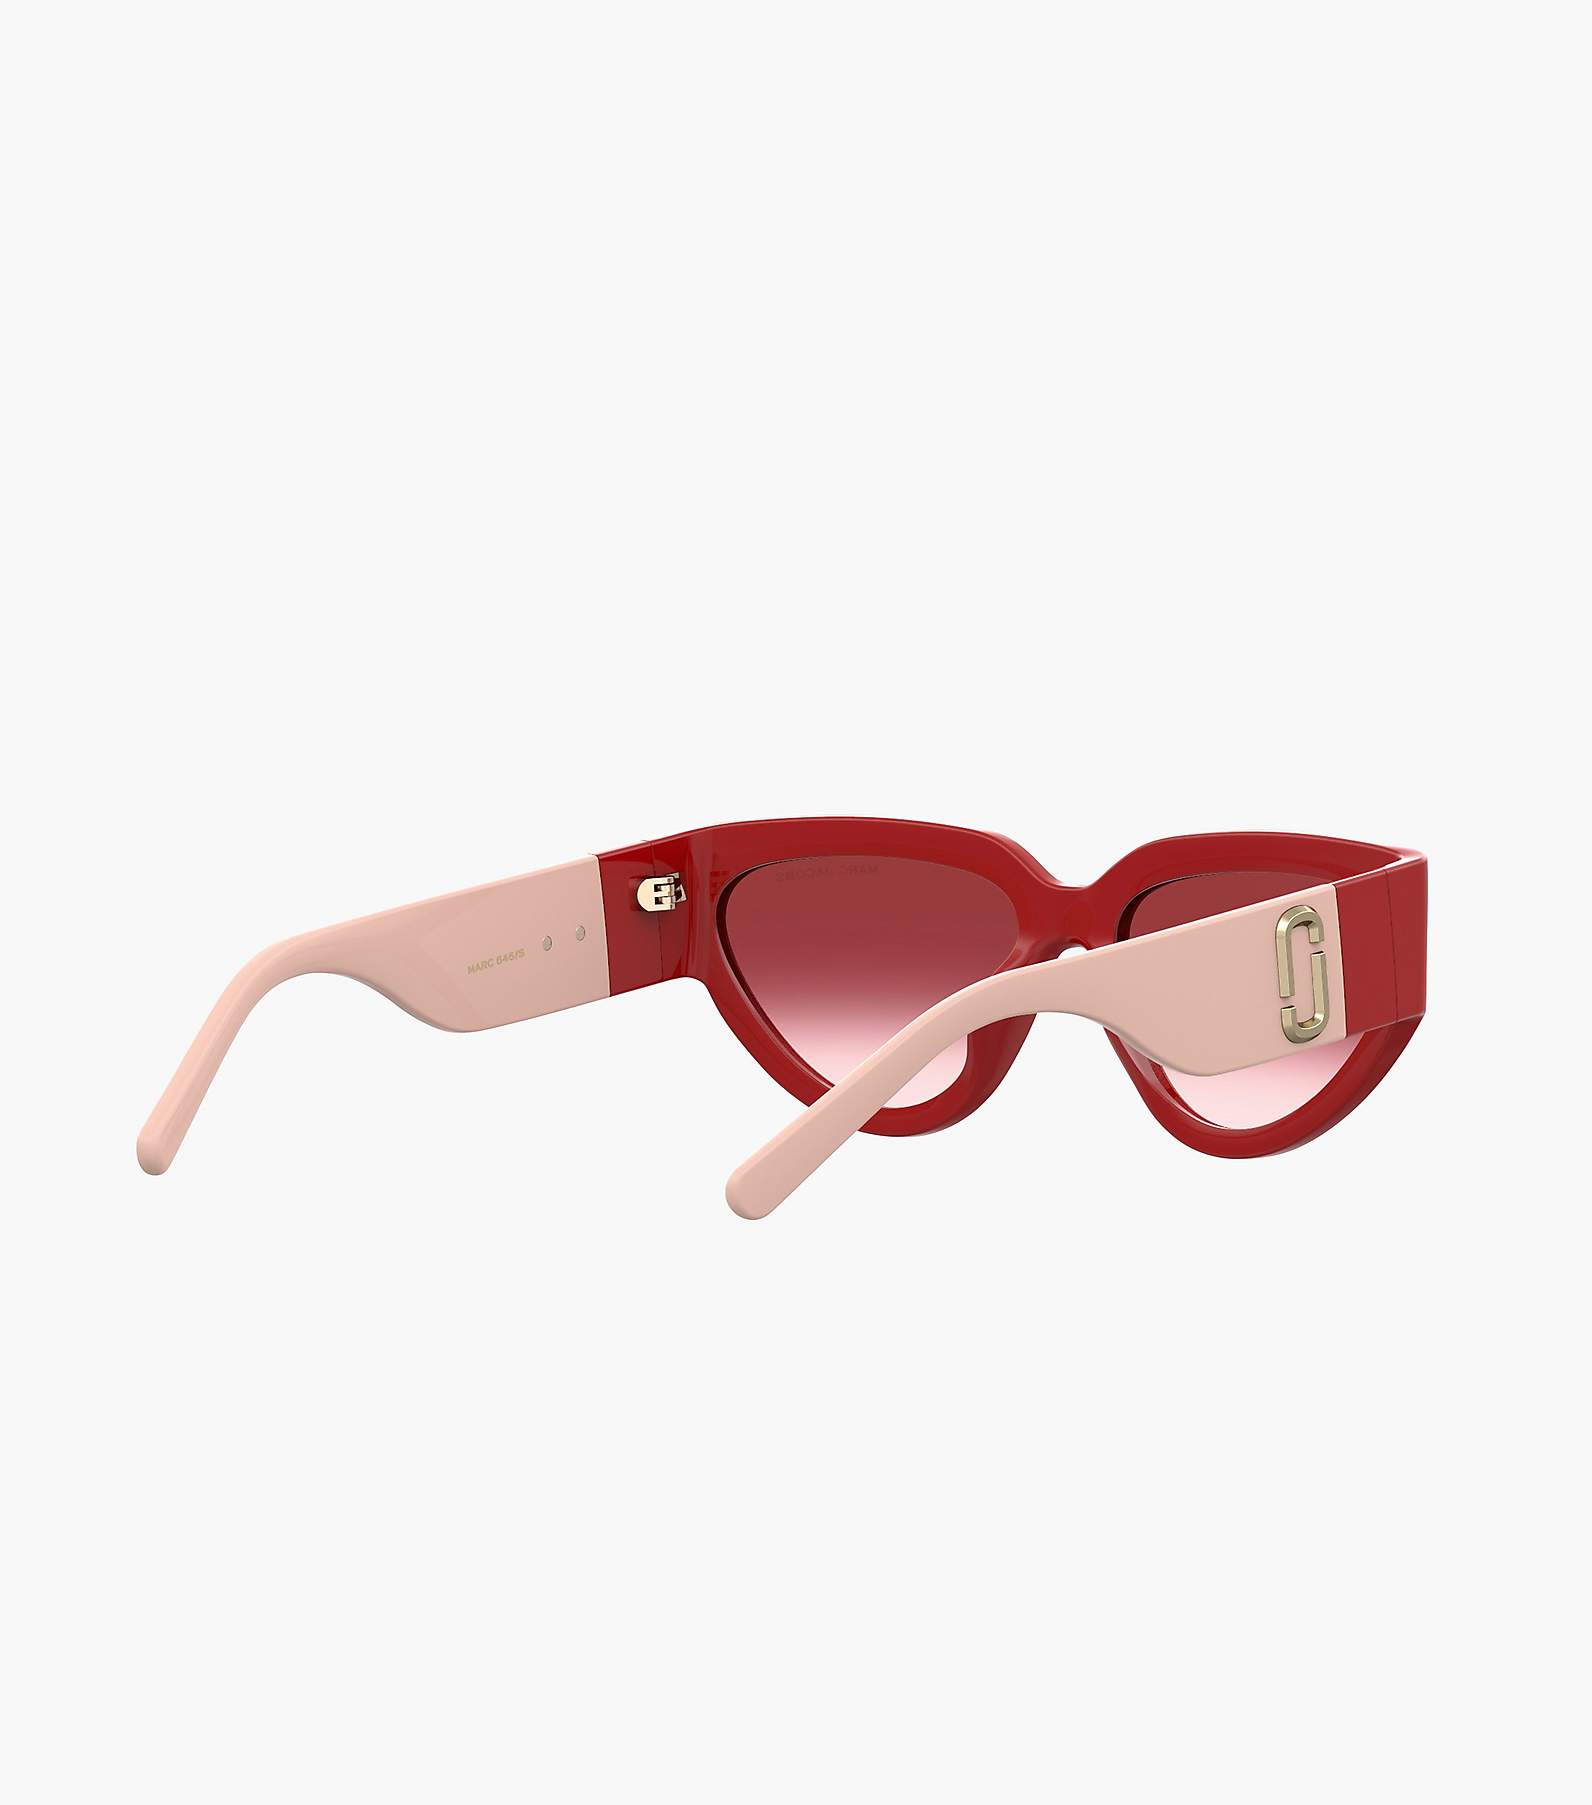 Marc Jacobs Sunglasses MJ538